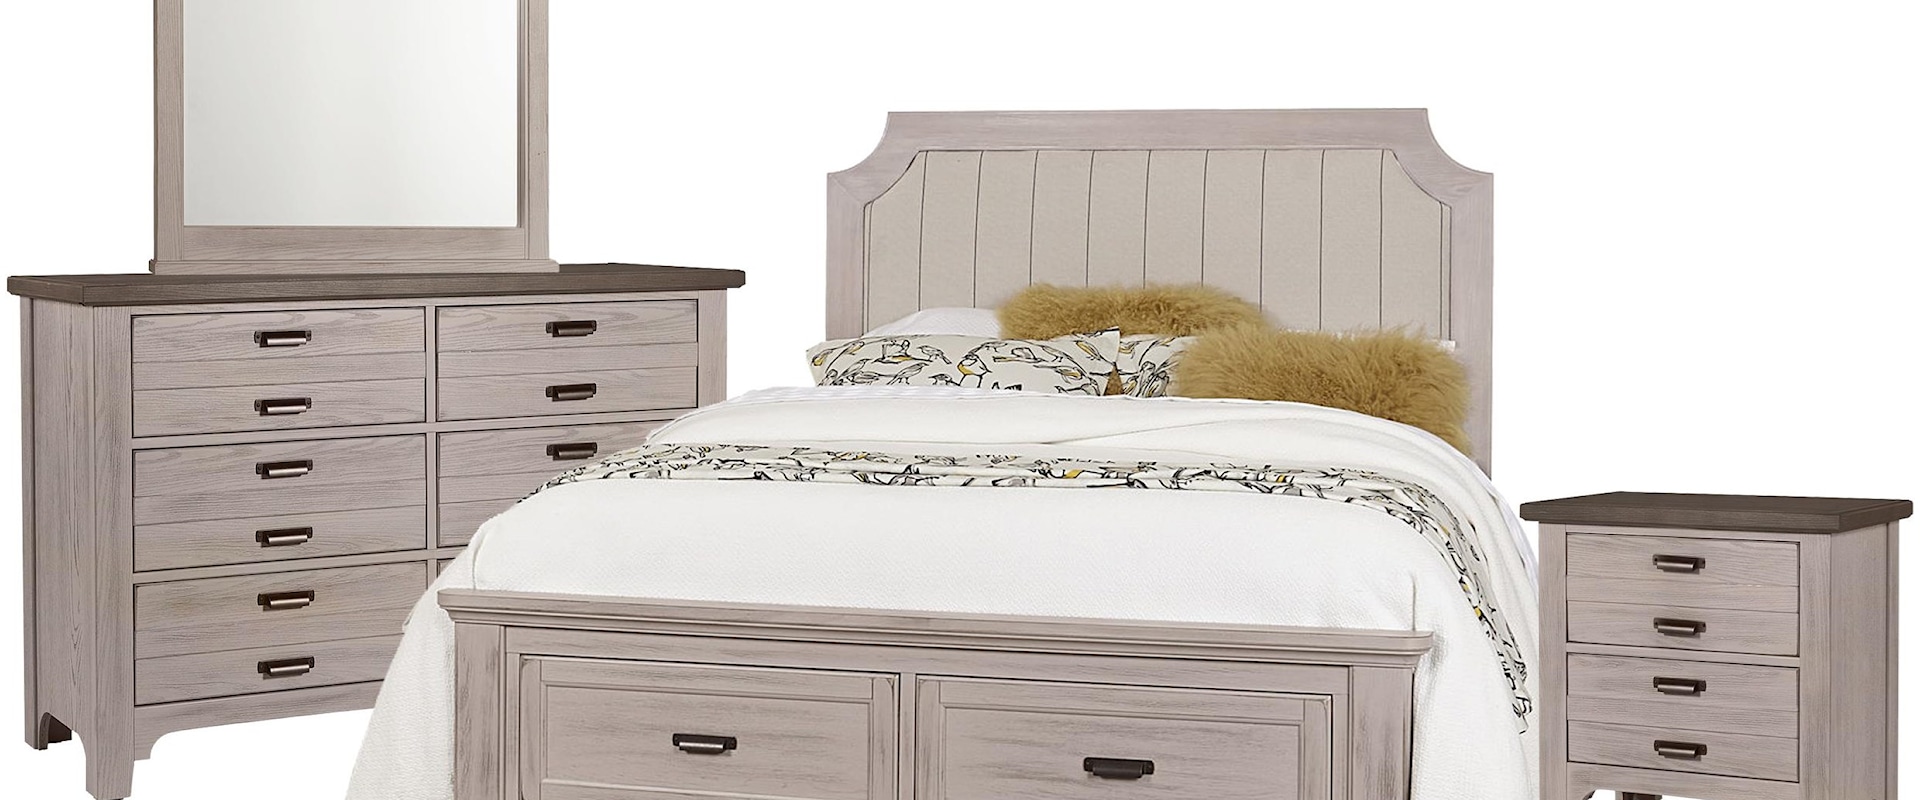 Queen Upholstered Storage Bed, Double Dresser, Landscape Mirror, 2 Drawer Nightstand